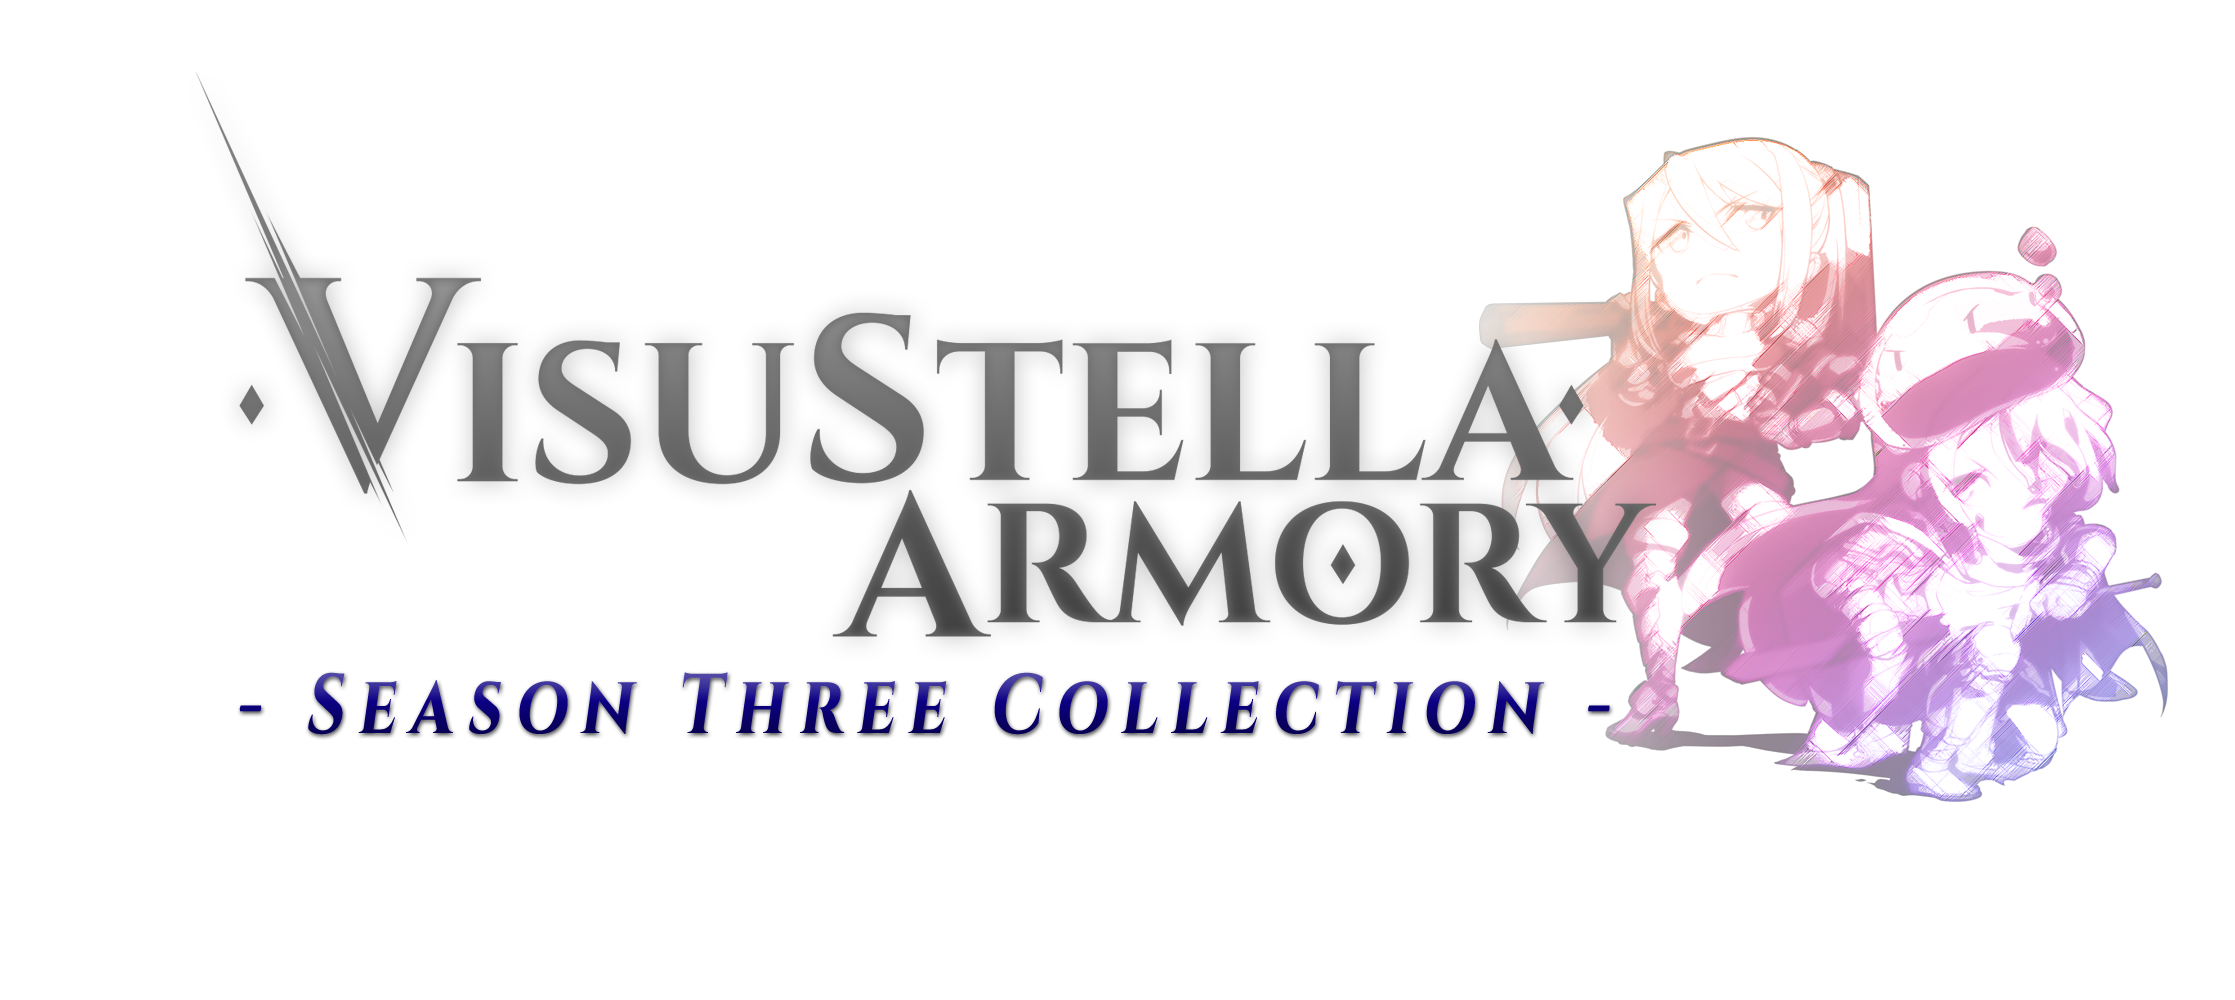 [✦] VisuStella Armory Season Three Collection